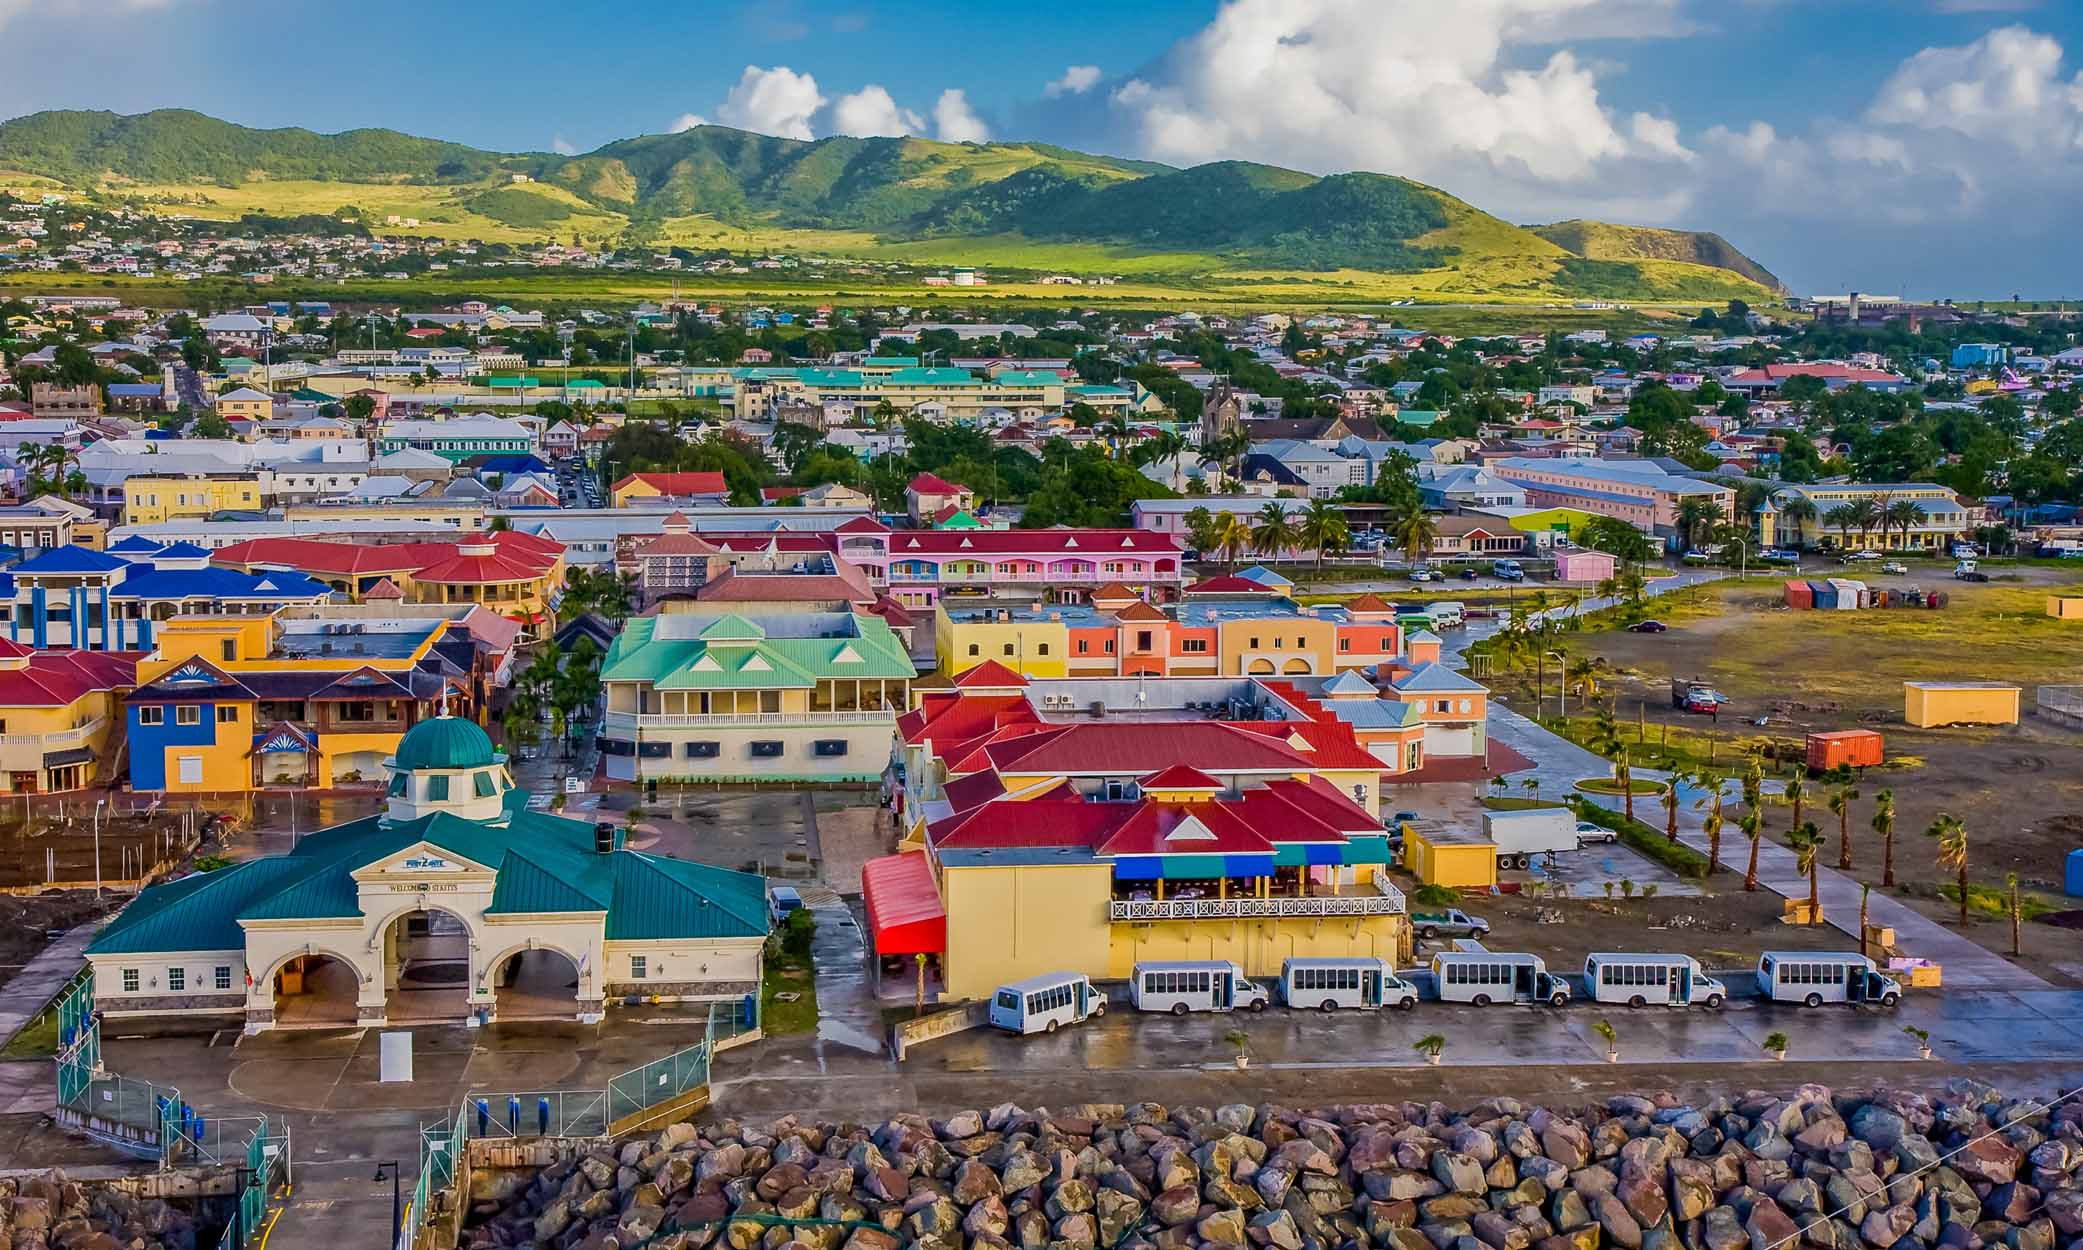 St Kitts renk ve hayat doludur.